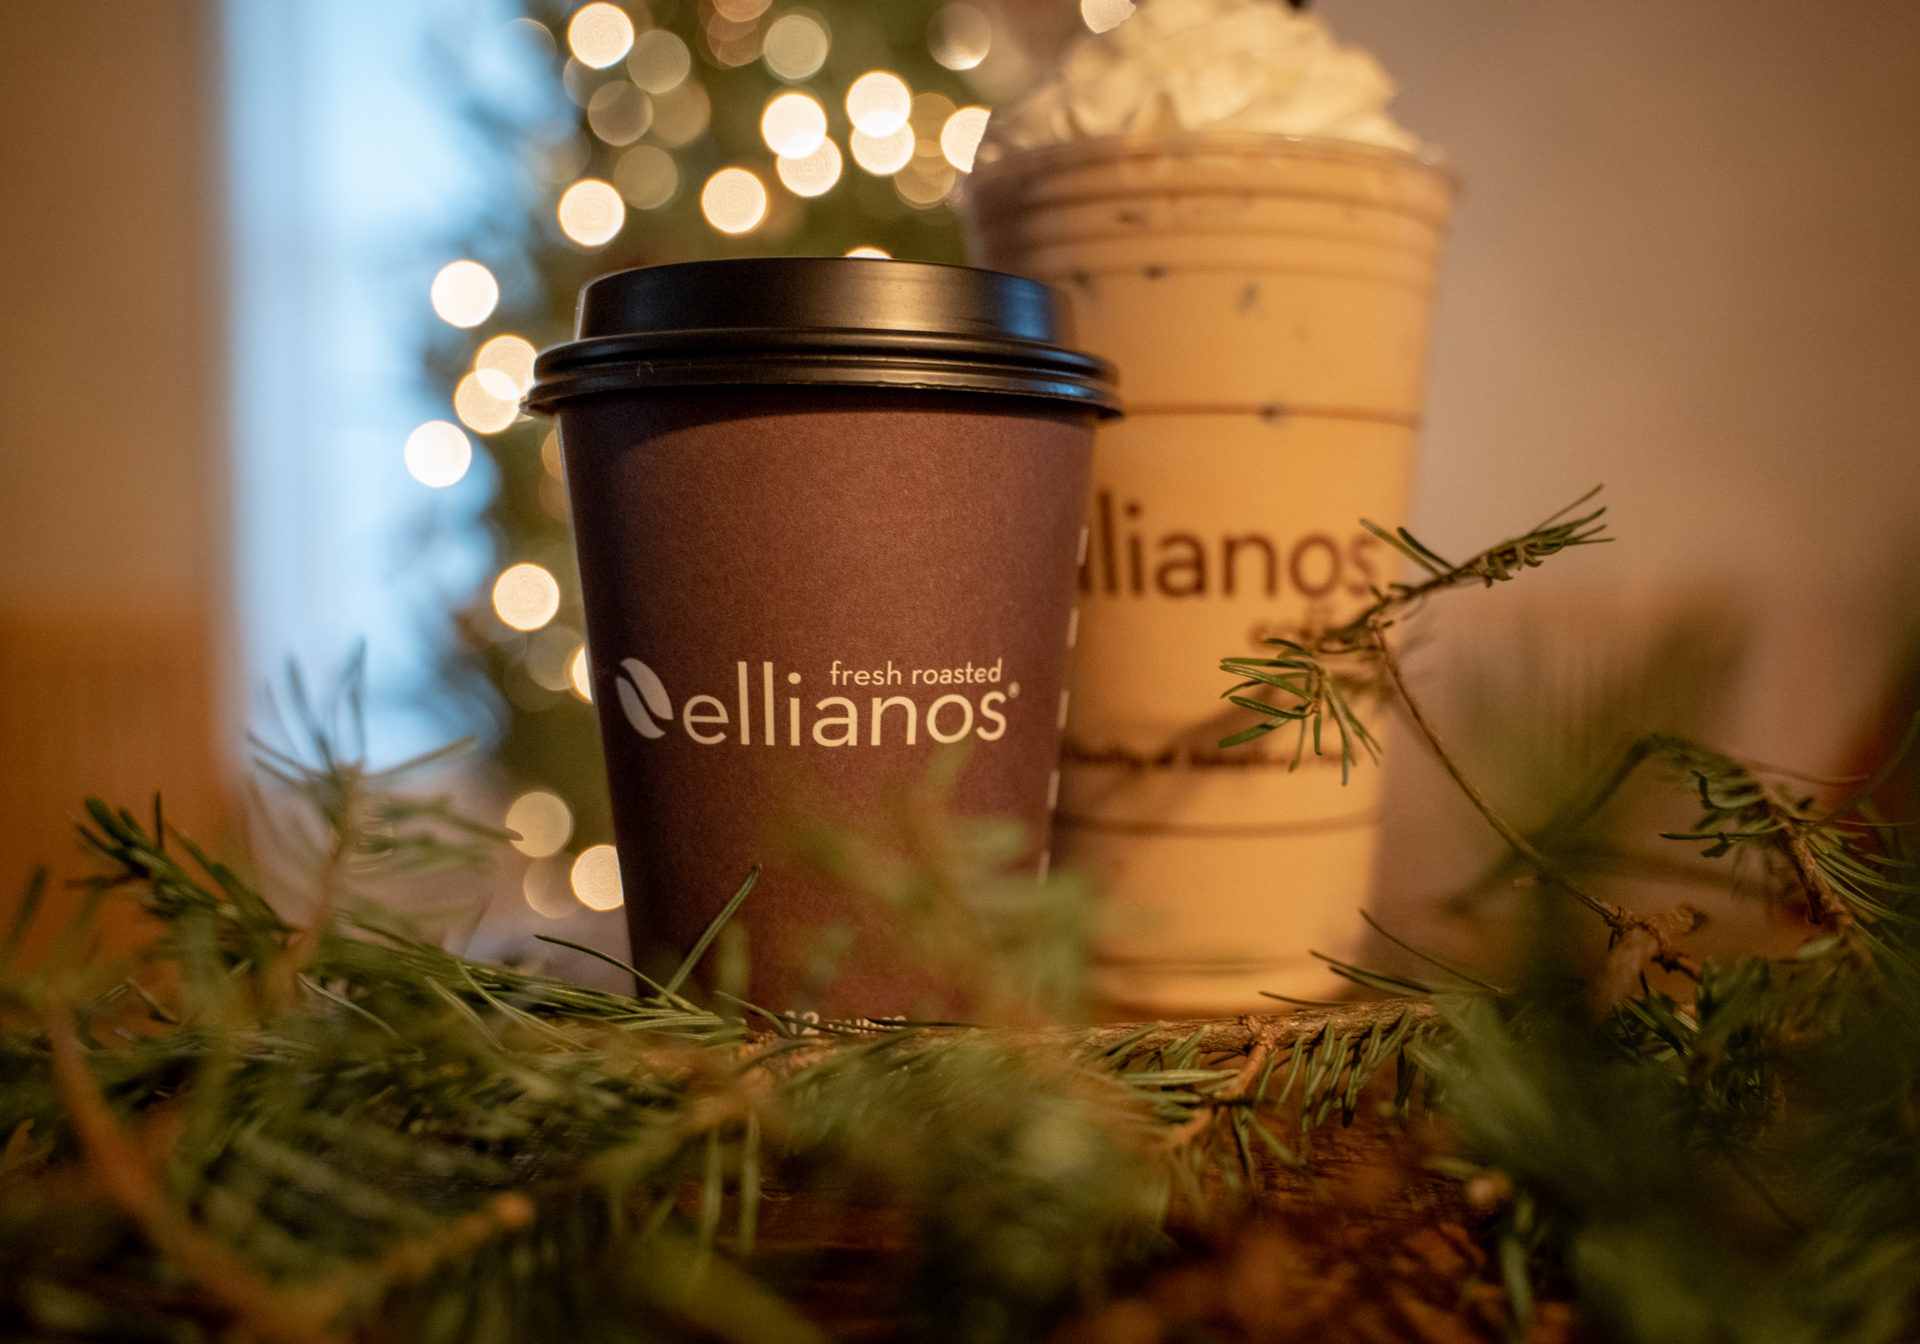 Customers Loving Ellianos this Holiday Season